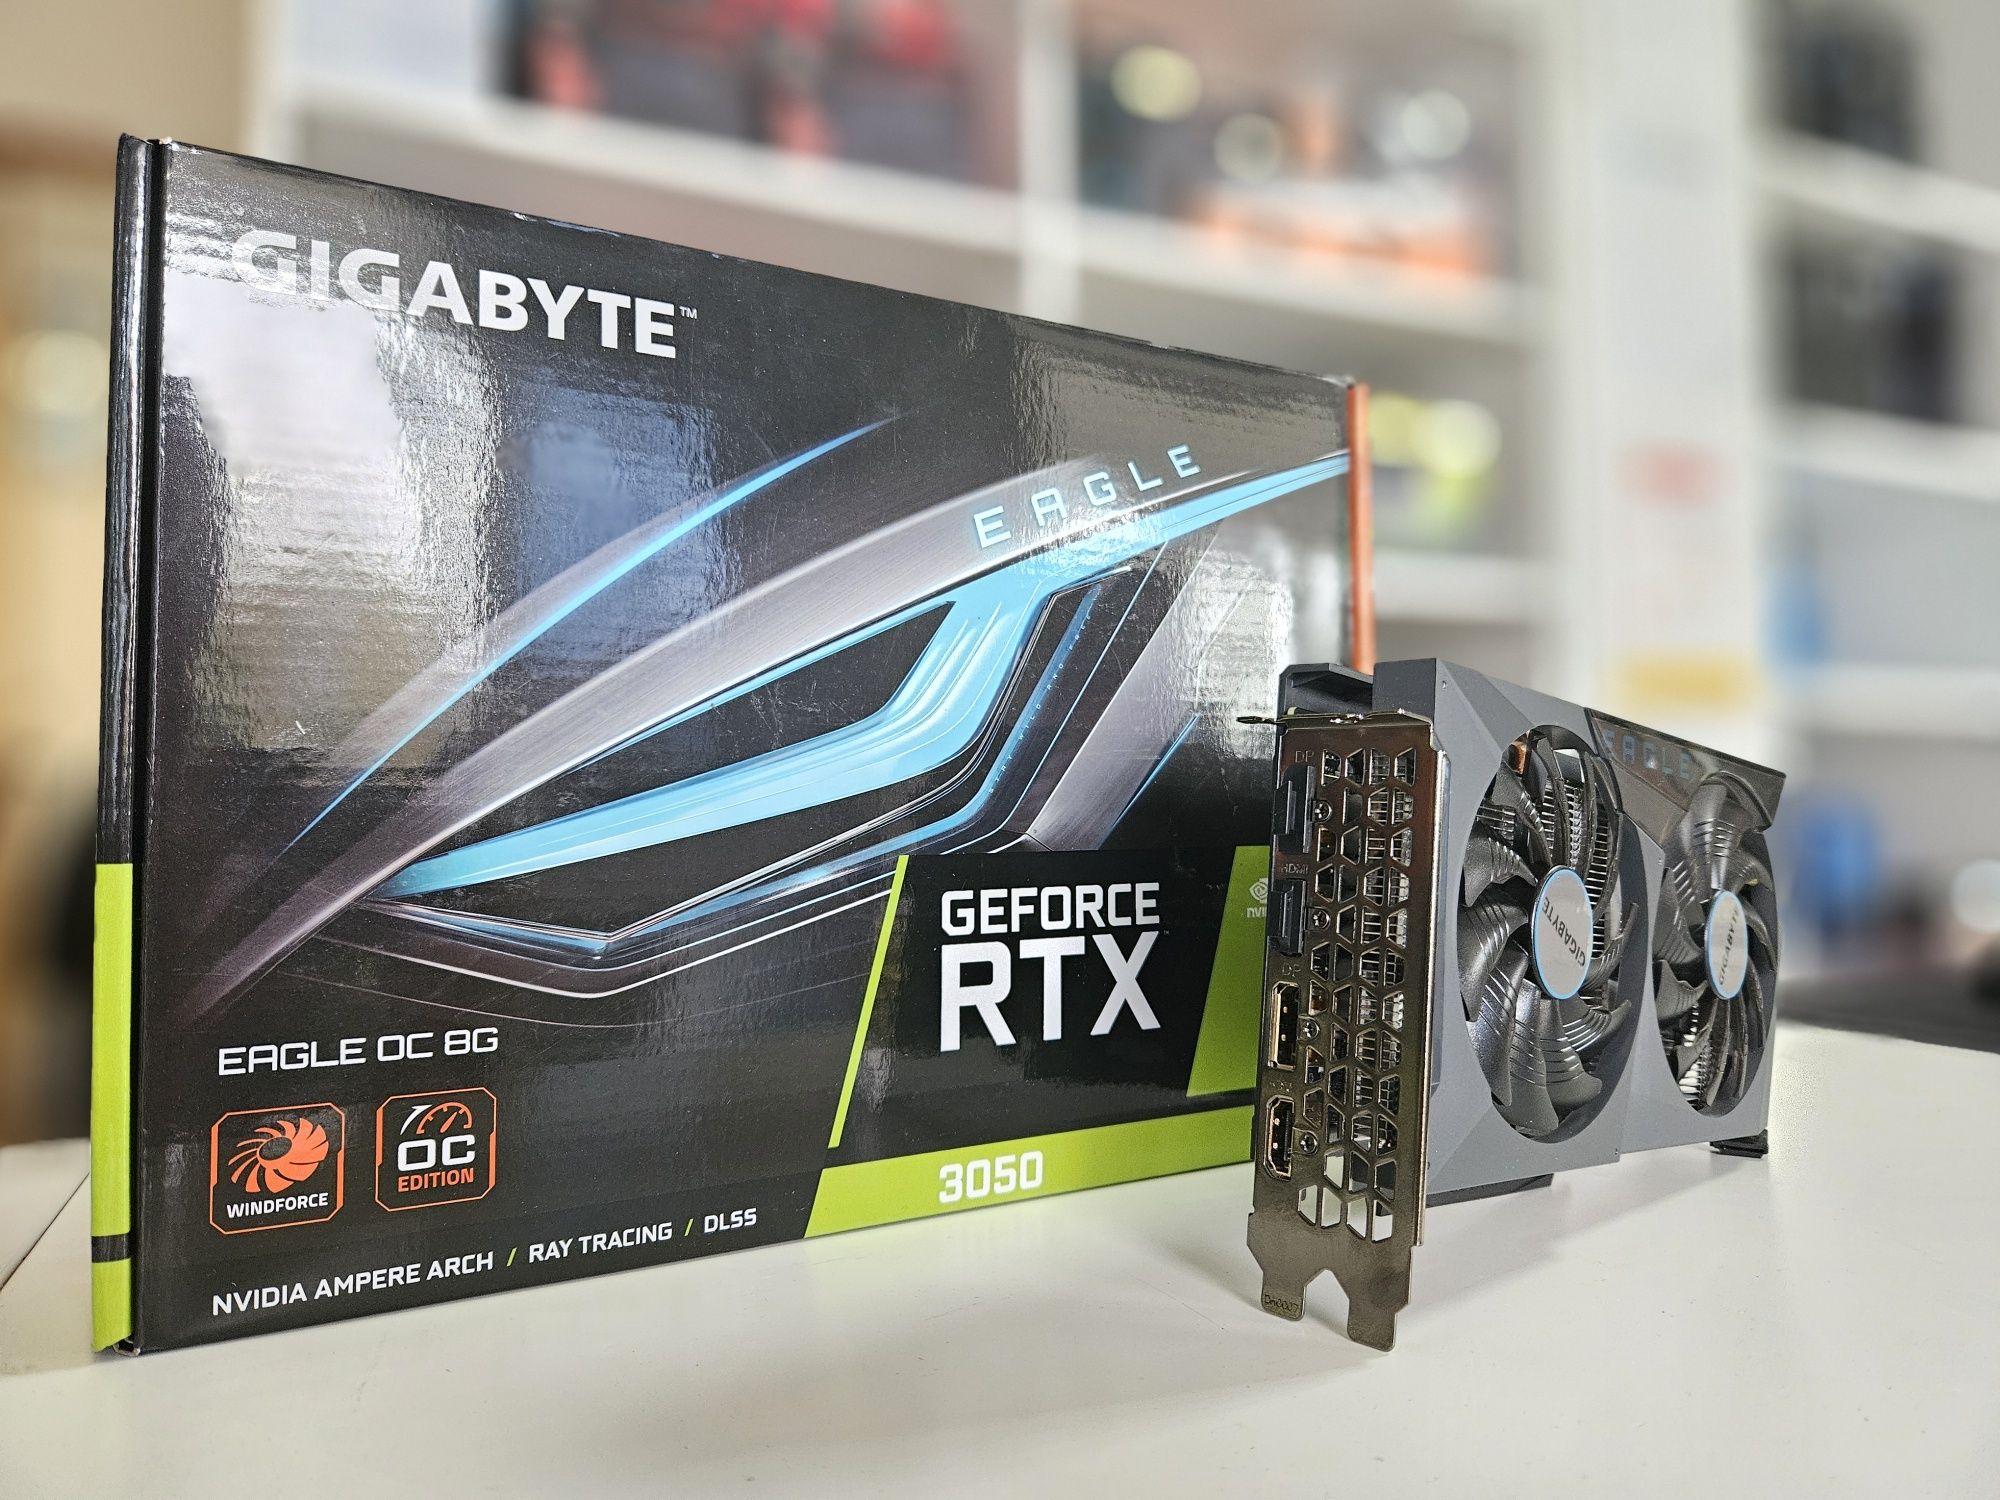 Gigabyte GeForce RTX 3050 8GB GDDR6 Eagle